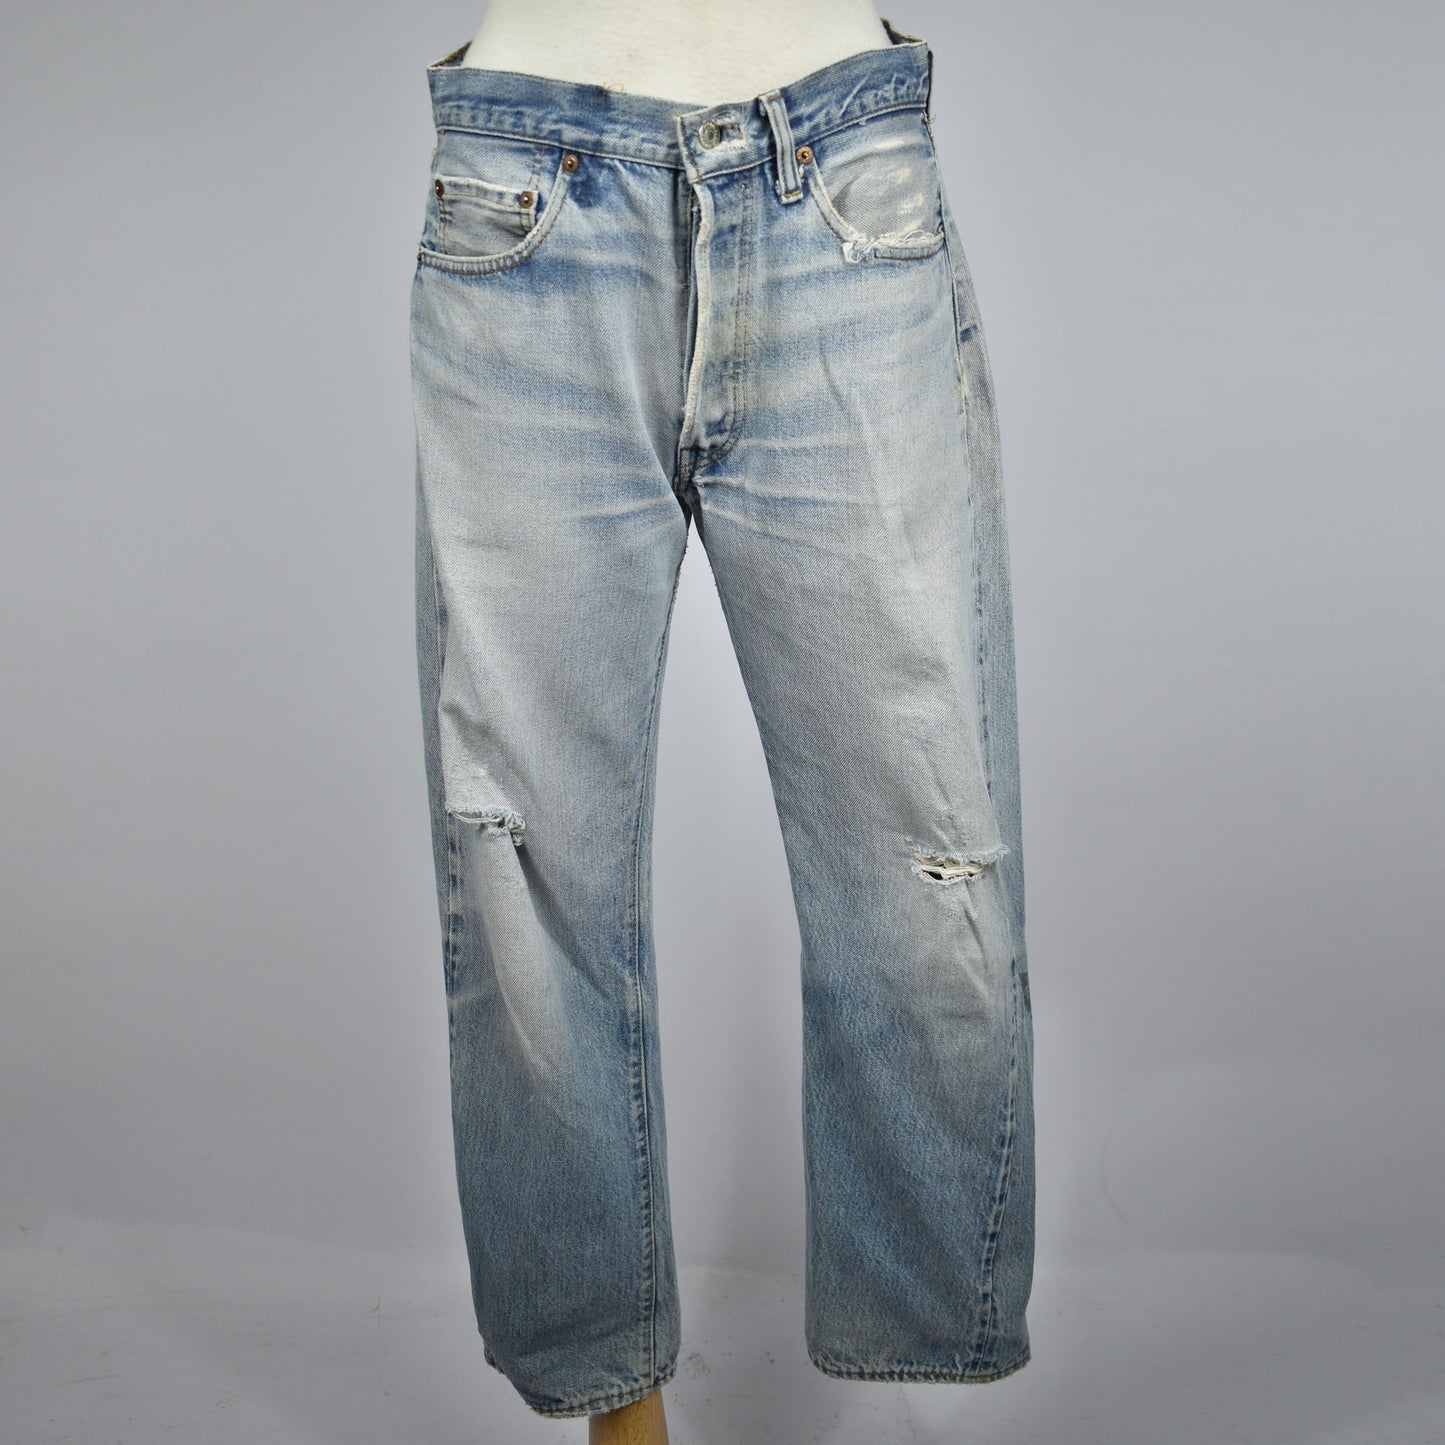 Vintage 501 Levi's Light Wash Made in USA Blue Jeans